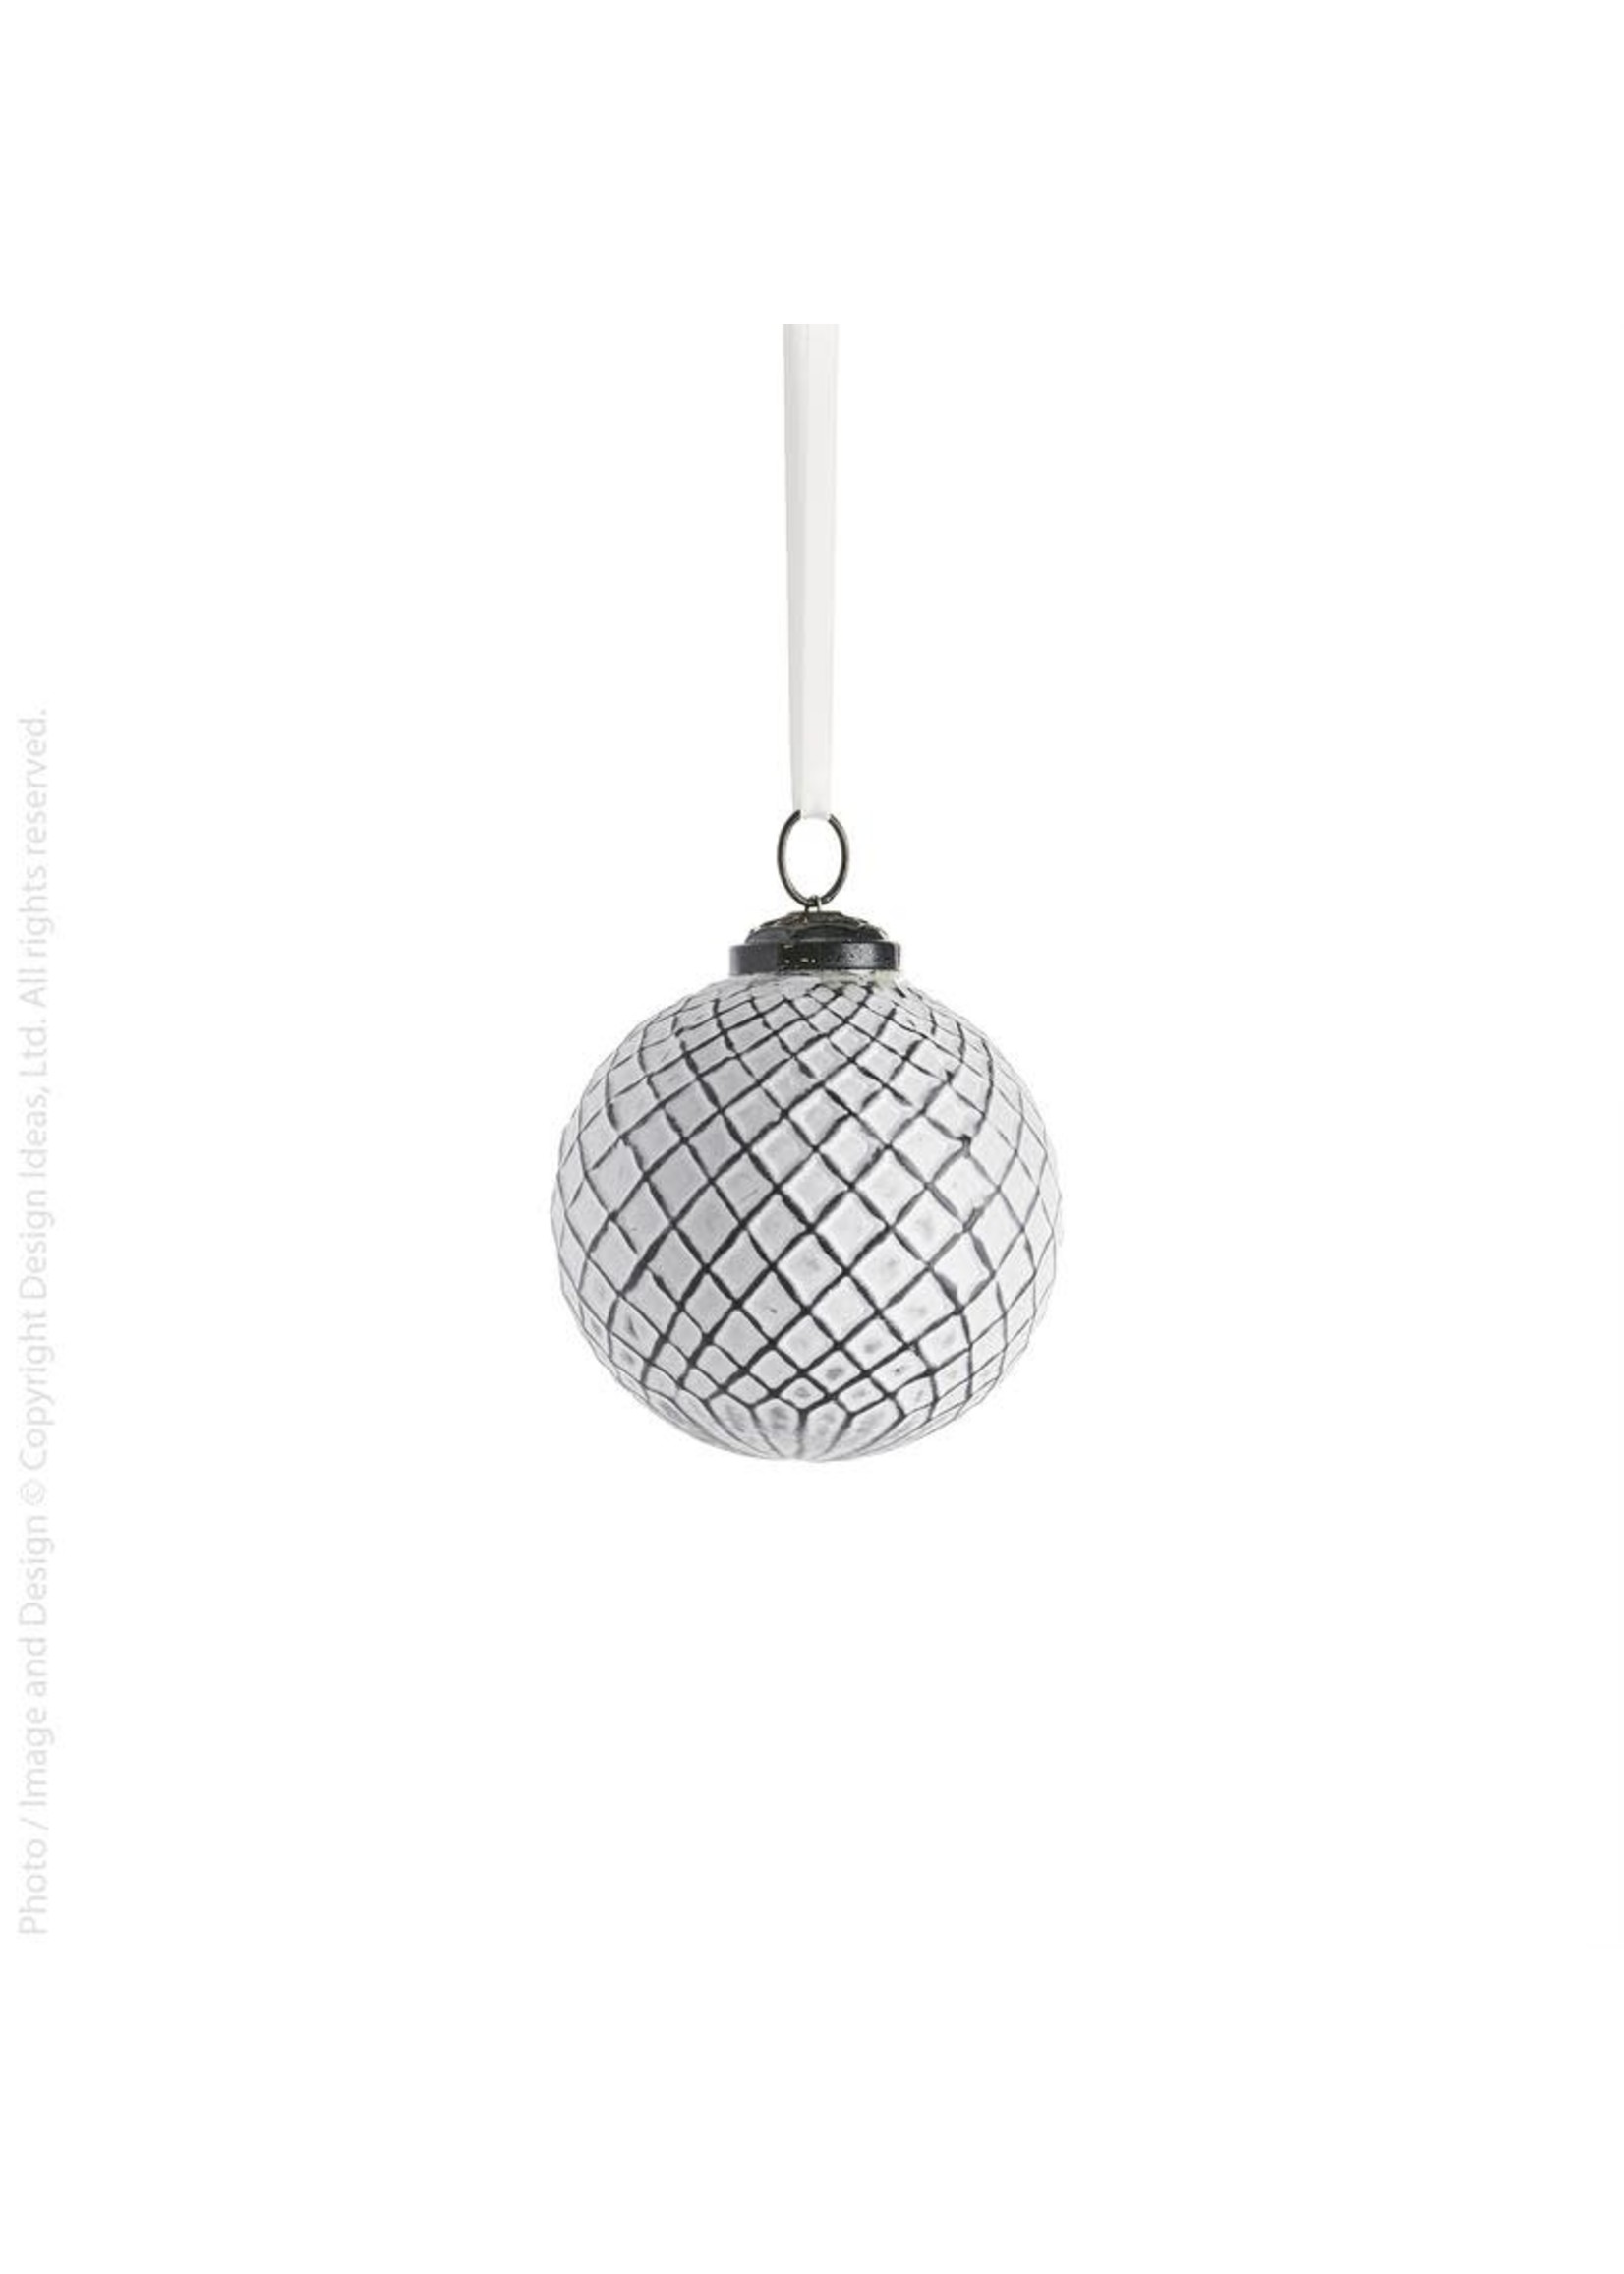 Design Ideas Breckenridge Ornament Arendel